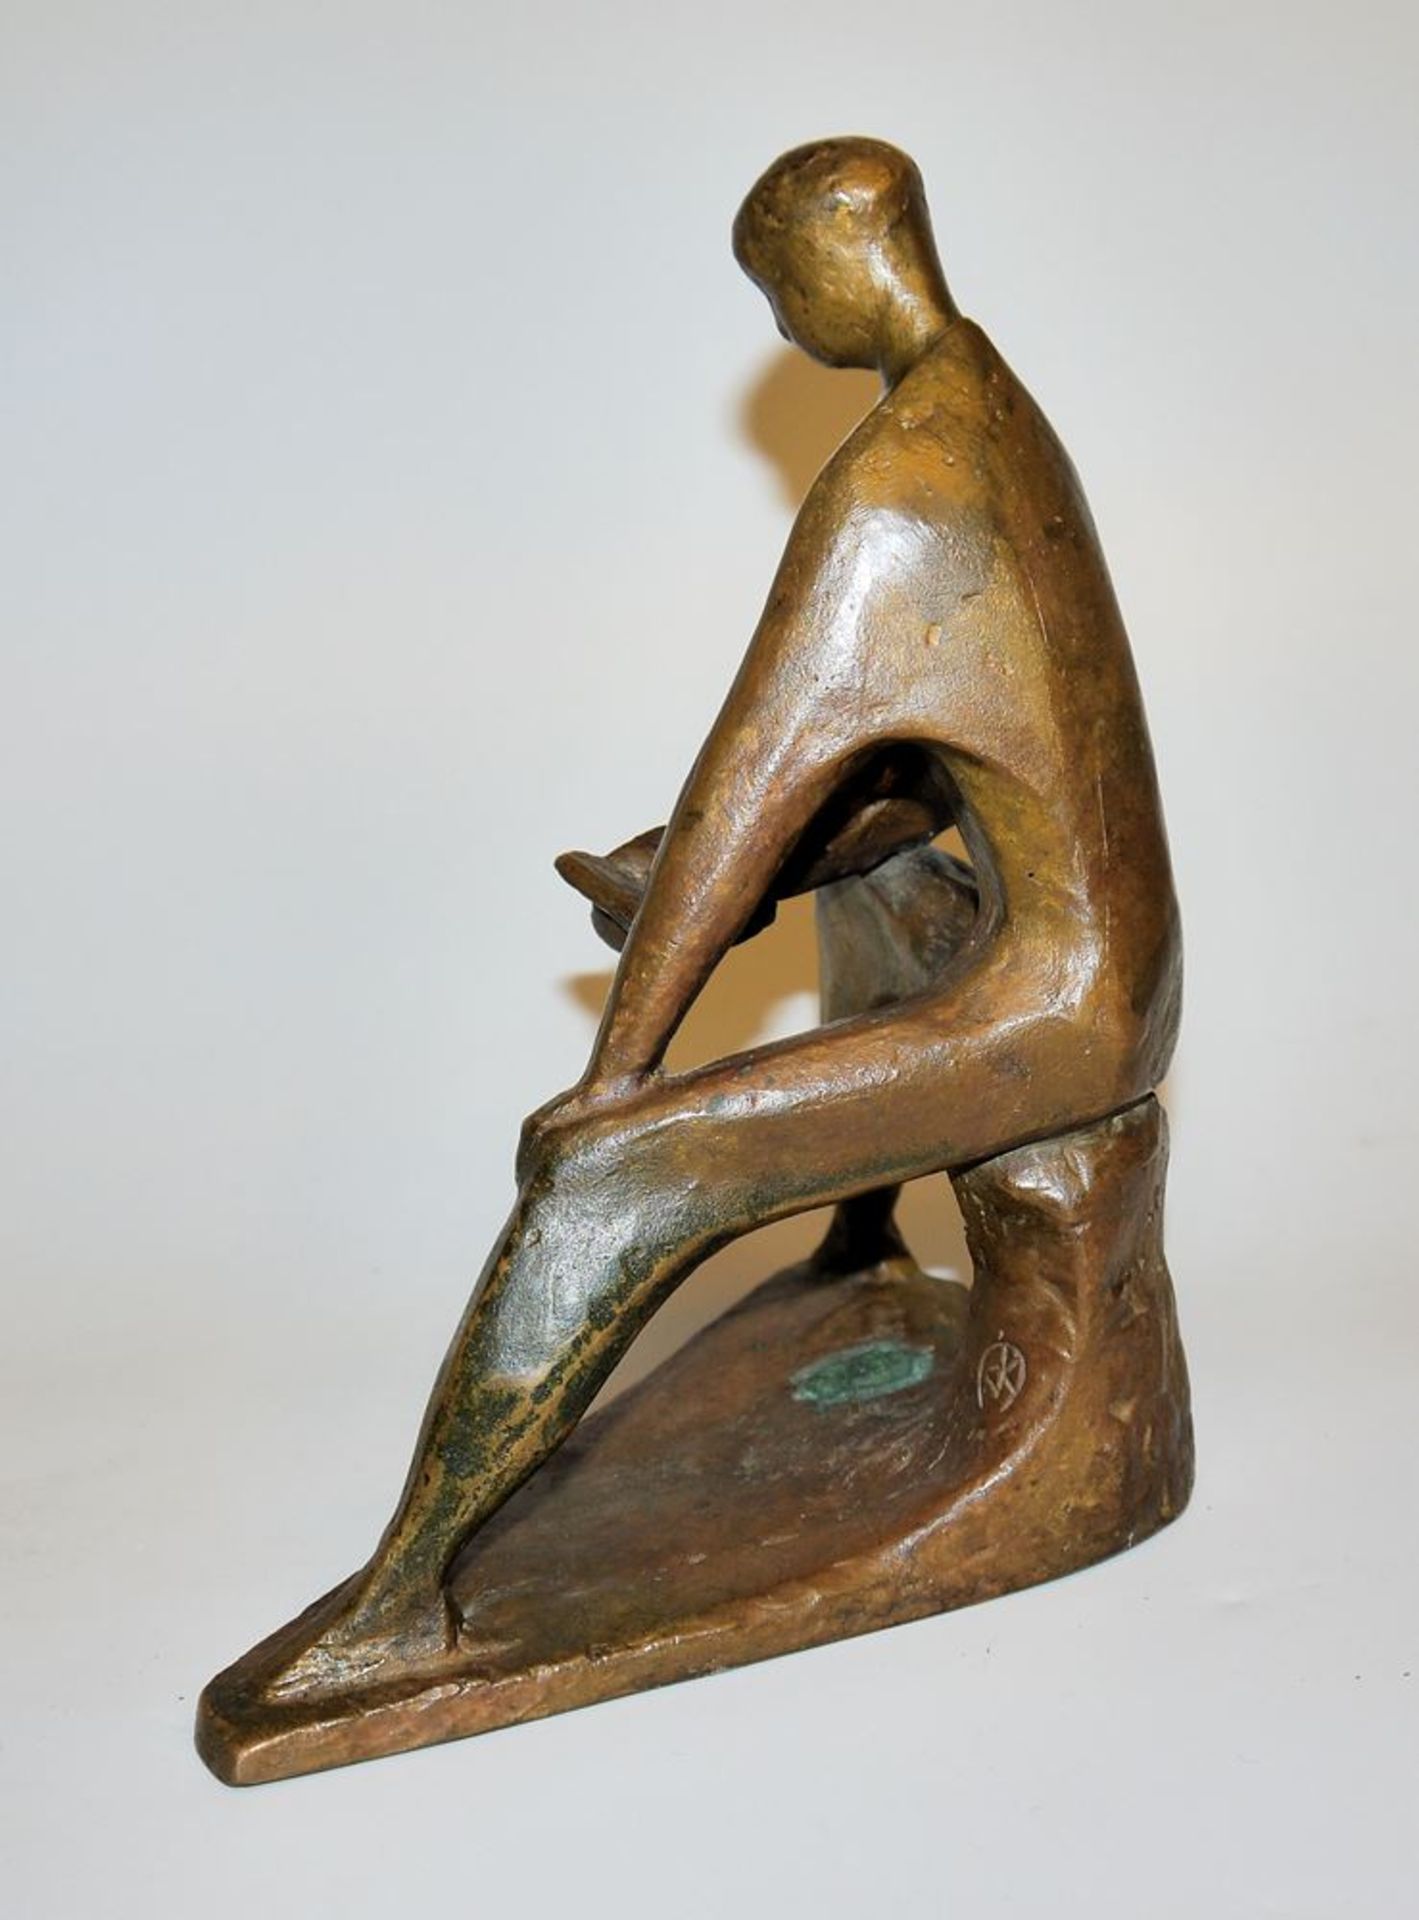 Joachim Karsch, Reading Man, bronze sculpture of the 1920s, foundry mark W. Füssel, Berlin - Image 2 of 3